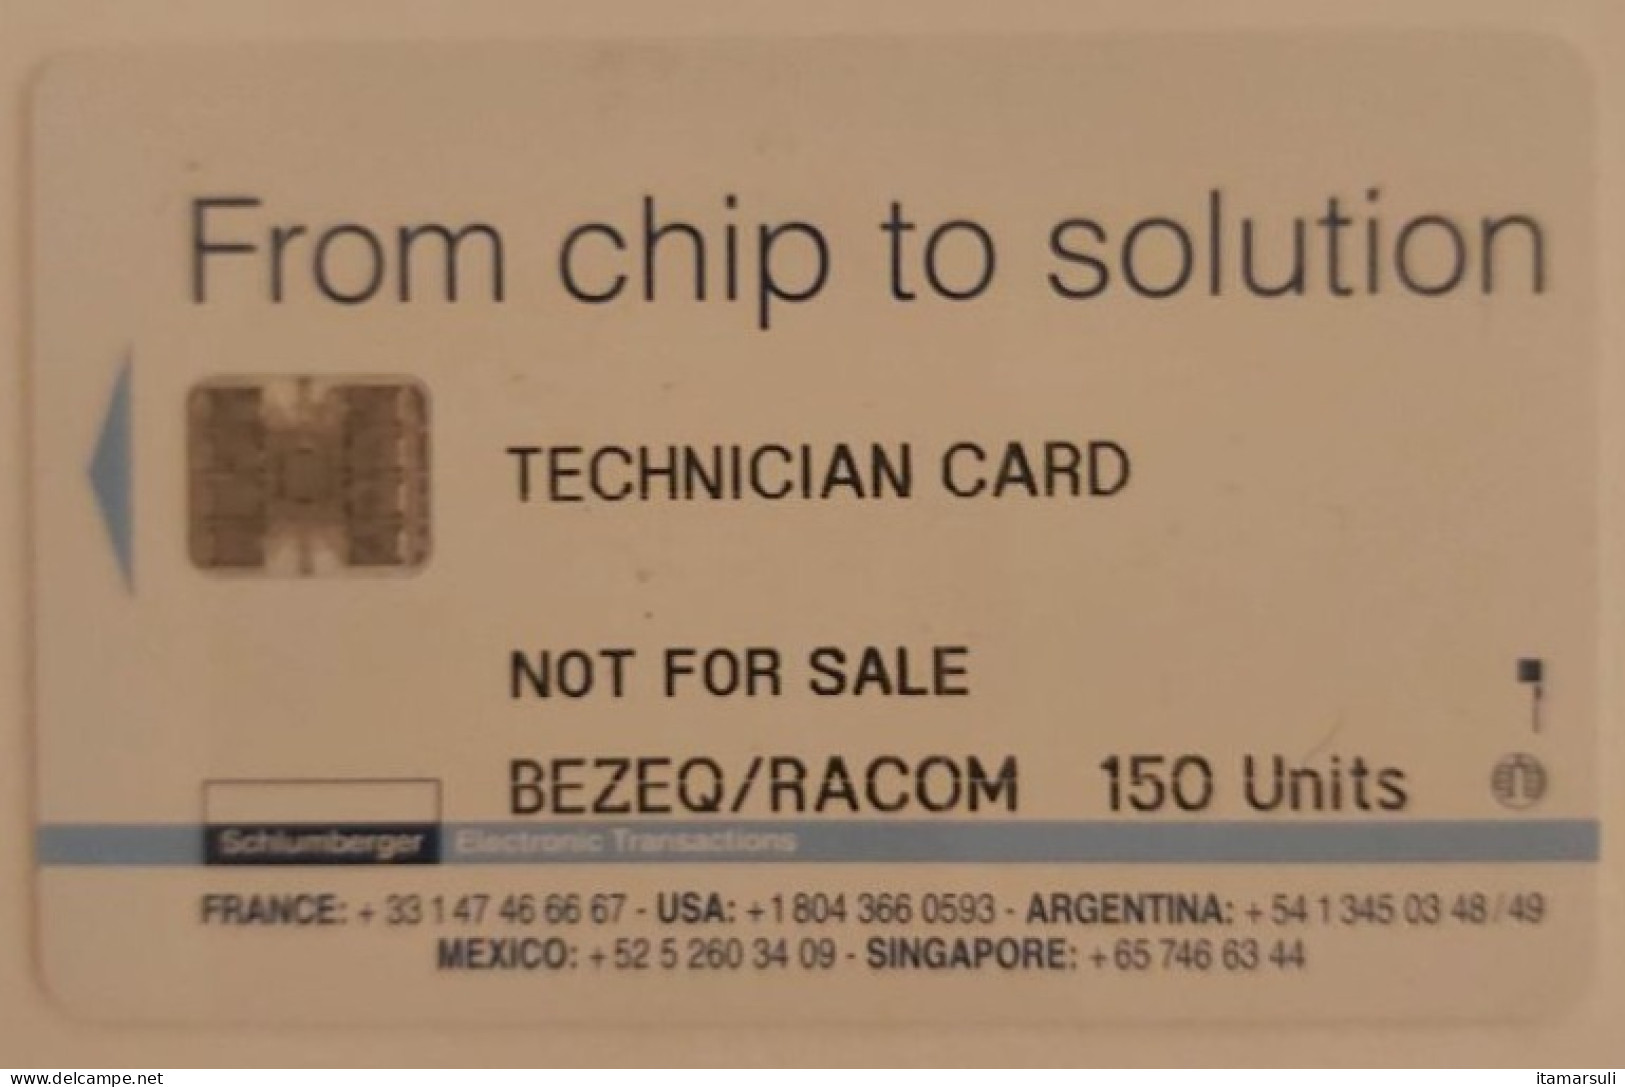 ISRAEL - Bezeq/Racom - Test Technician Chip Card, Schlumberger, Perfect Condition - Israel